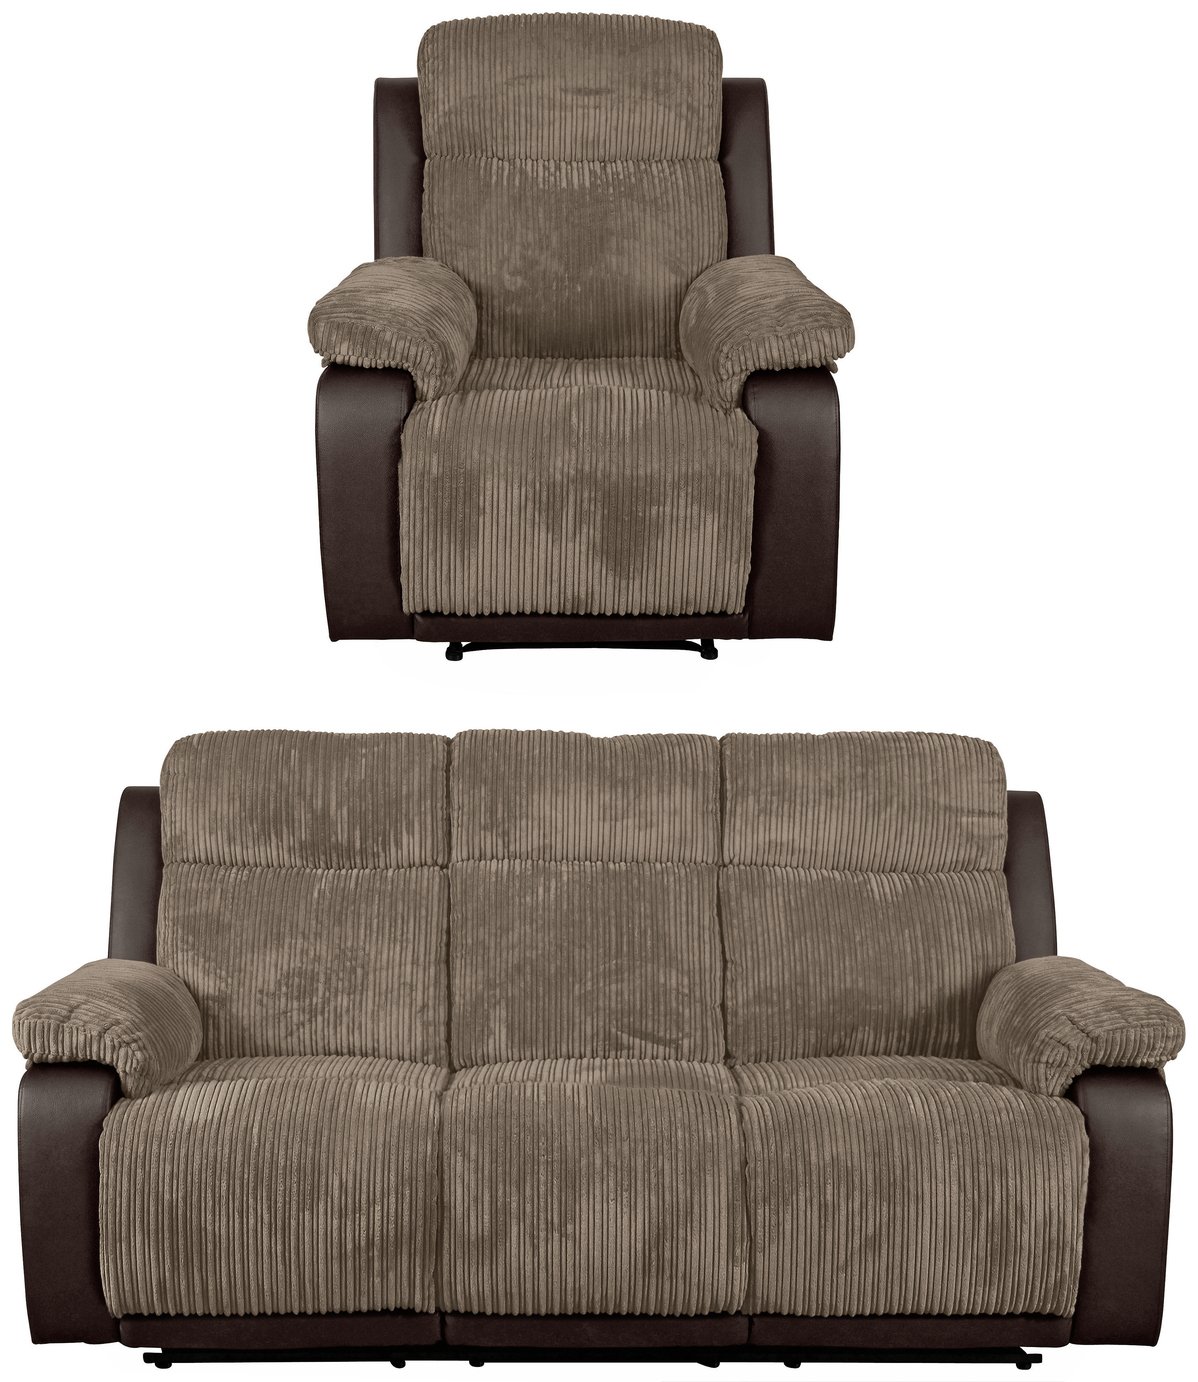 Argos Home Bradley Chair & 3 Seater Recliner Sofa - Natural